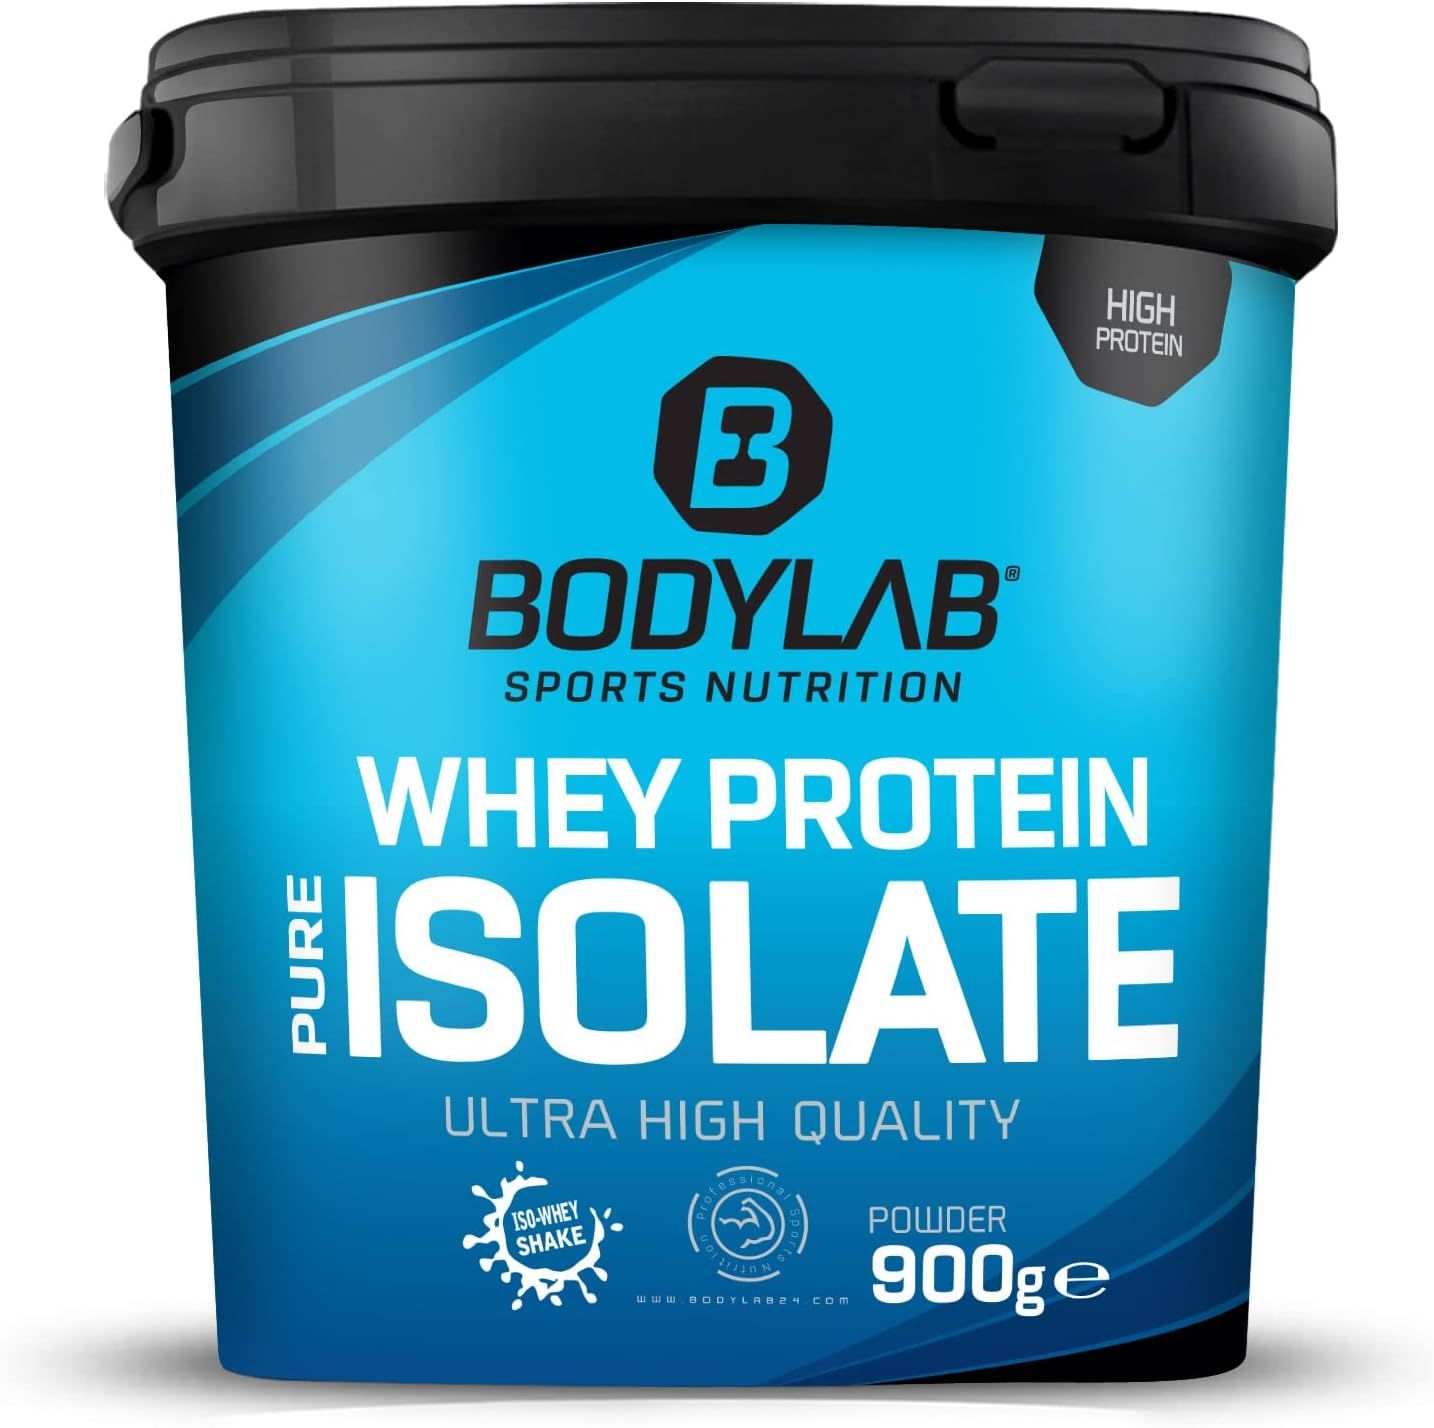 Bodylab24 Whey Protein Isolate Pfirsich Joghurt